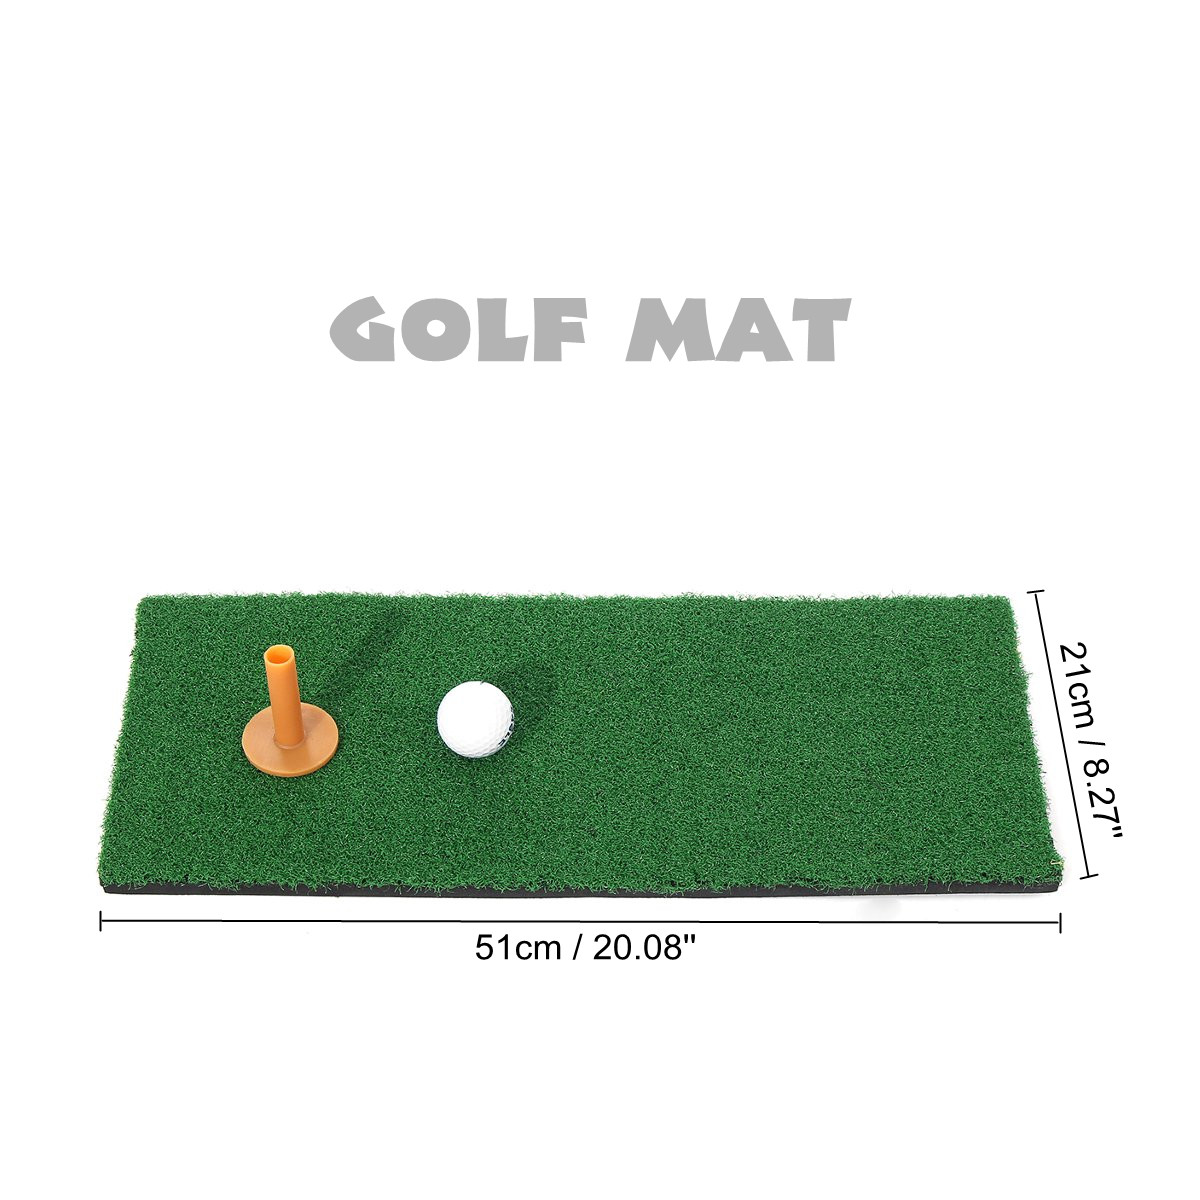 Golf-Chipping-Net-Folding-Mini-Golf-Training-Net-Swing-Pitching-Net-Outdoor-Sport-with-Golf-Mat-1696704-3